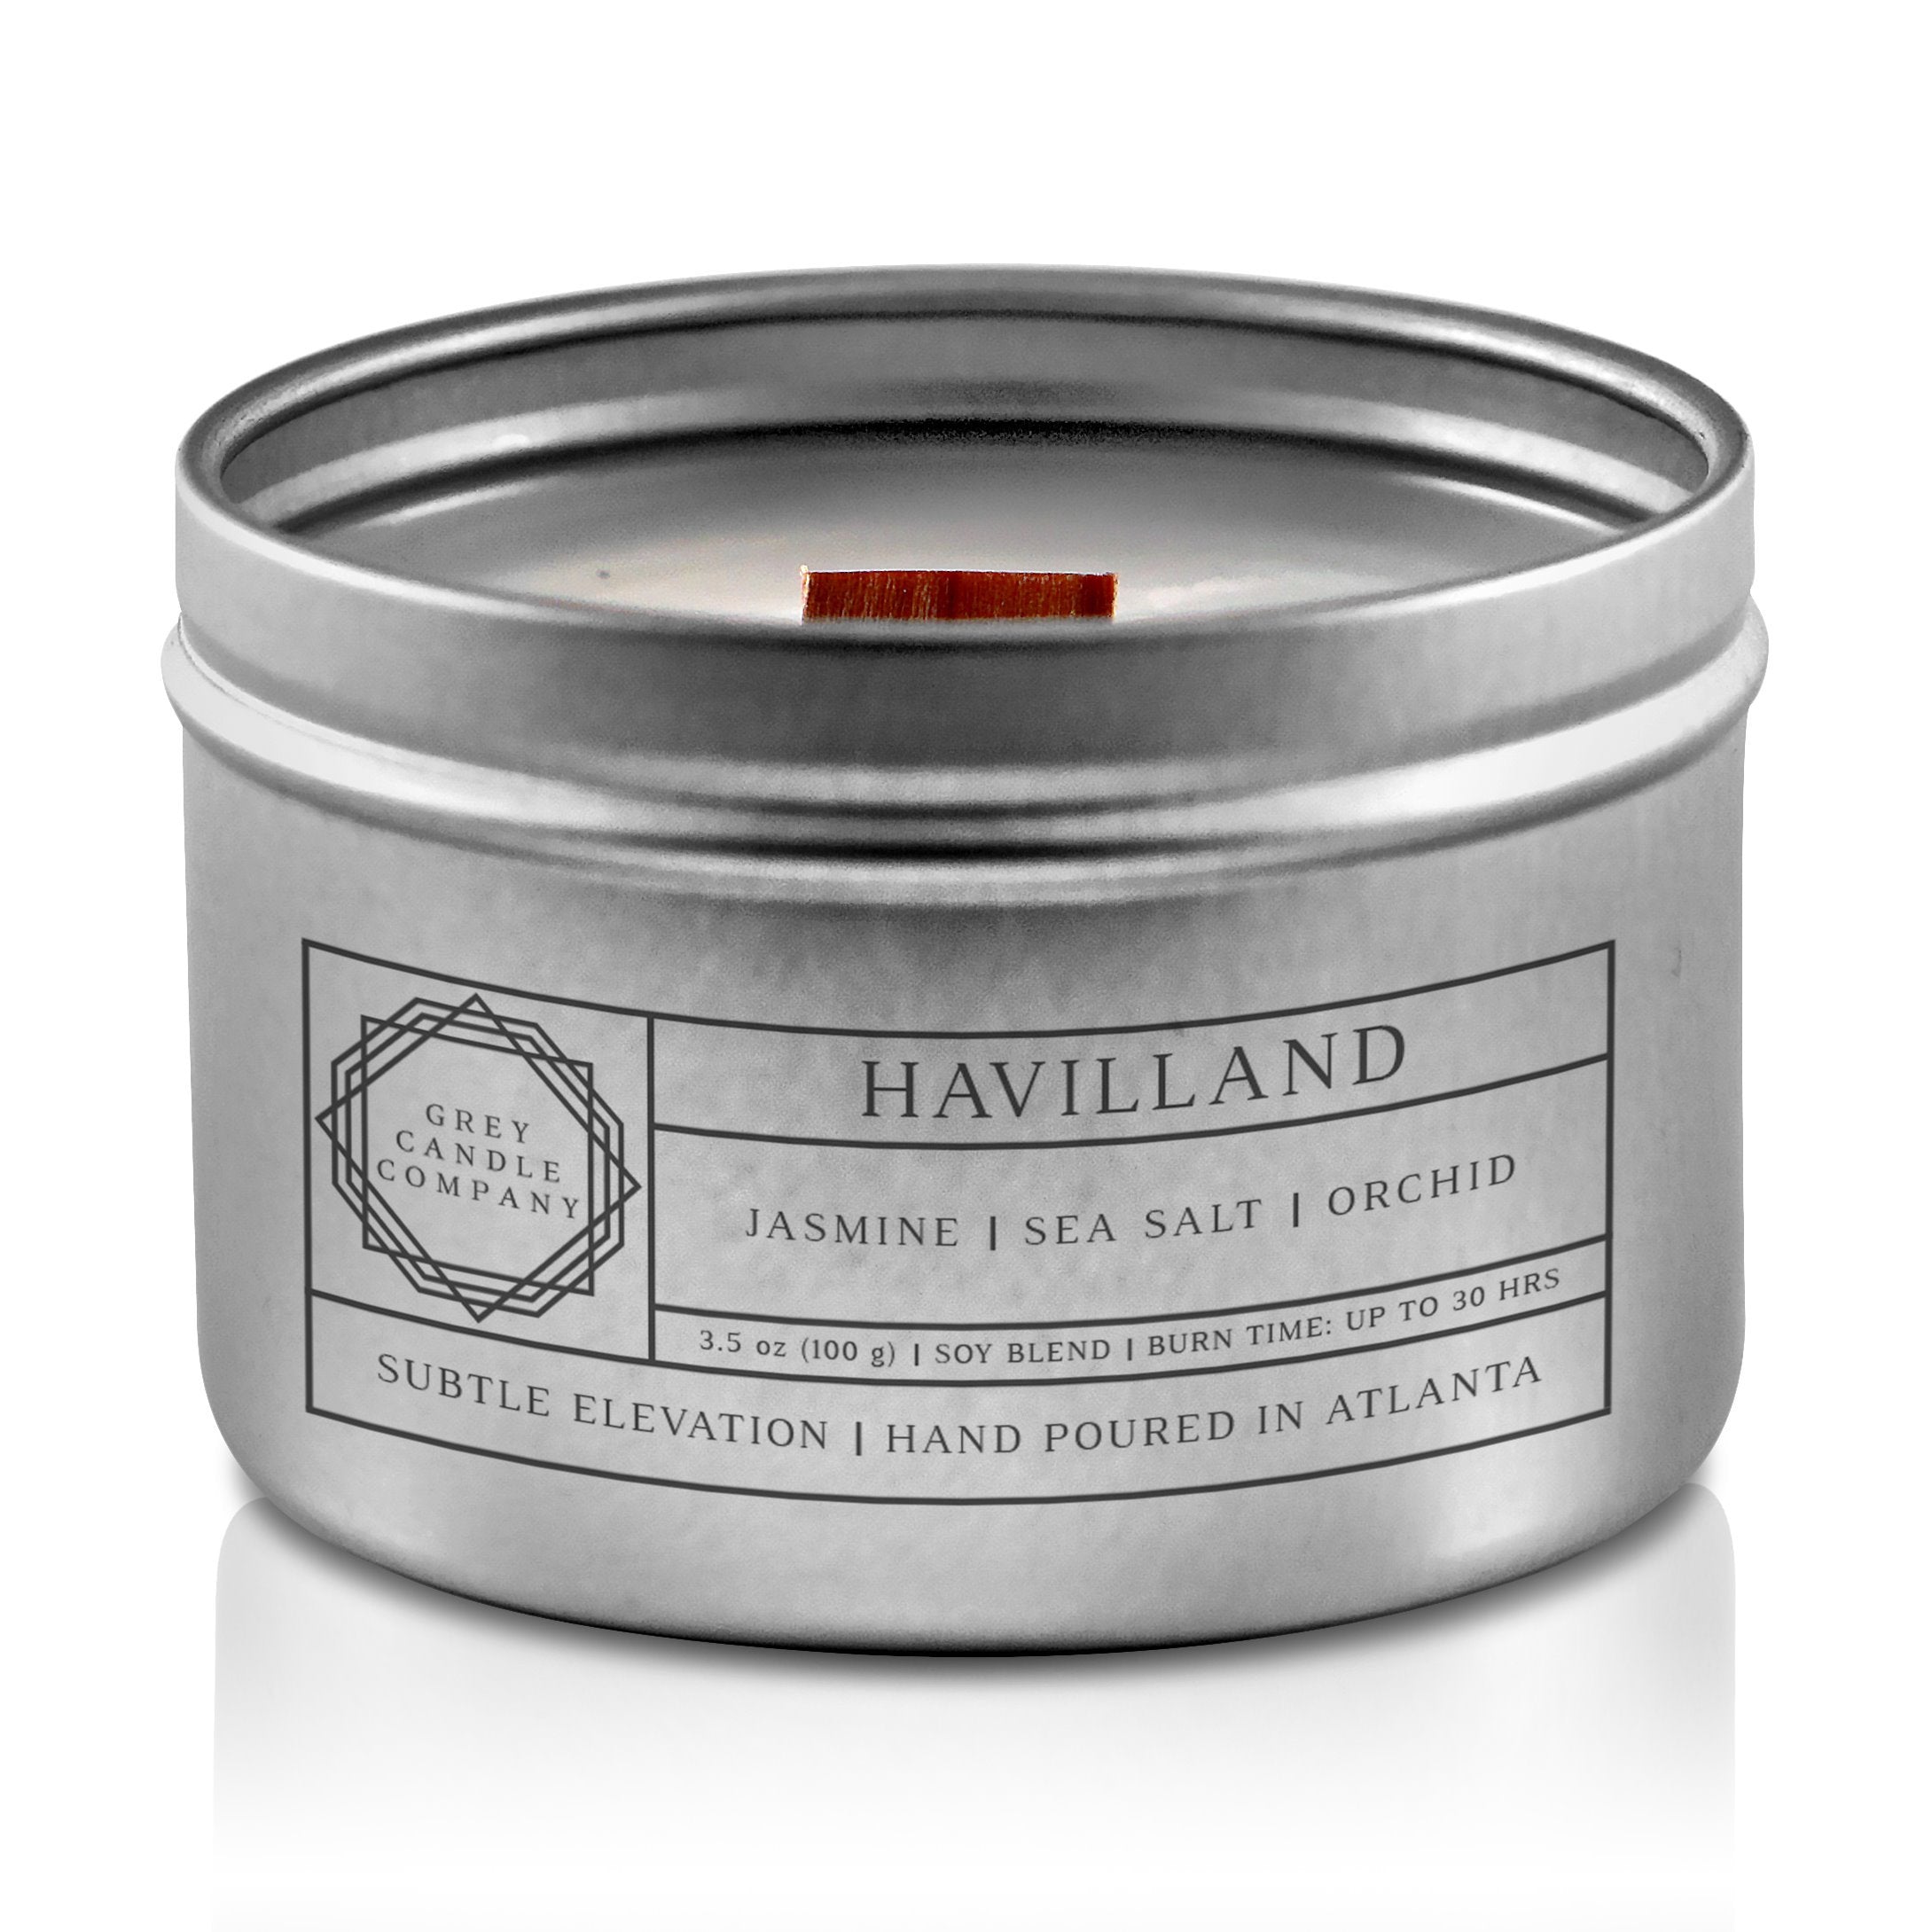 HAVILLAND CANDLES Grey Candle Company 3.5 oz. TIN 